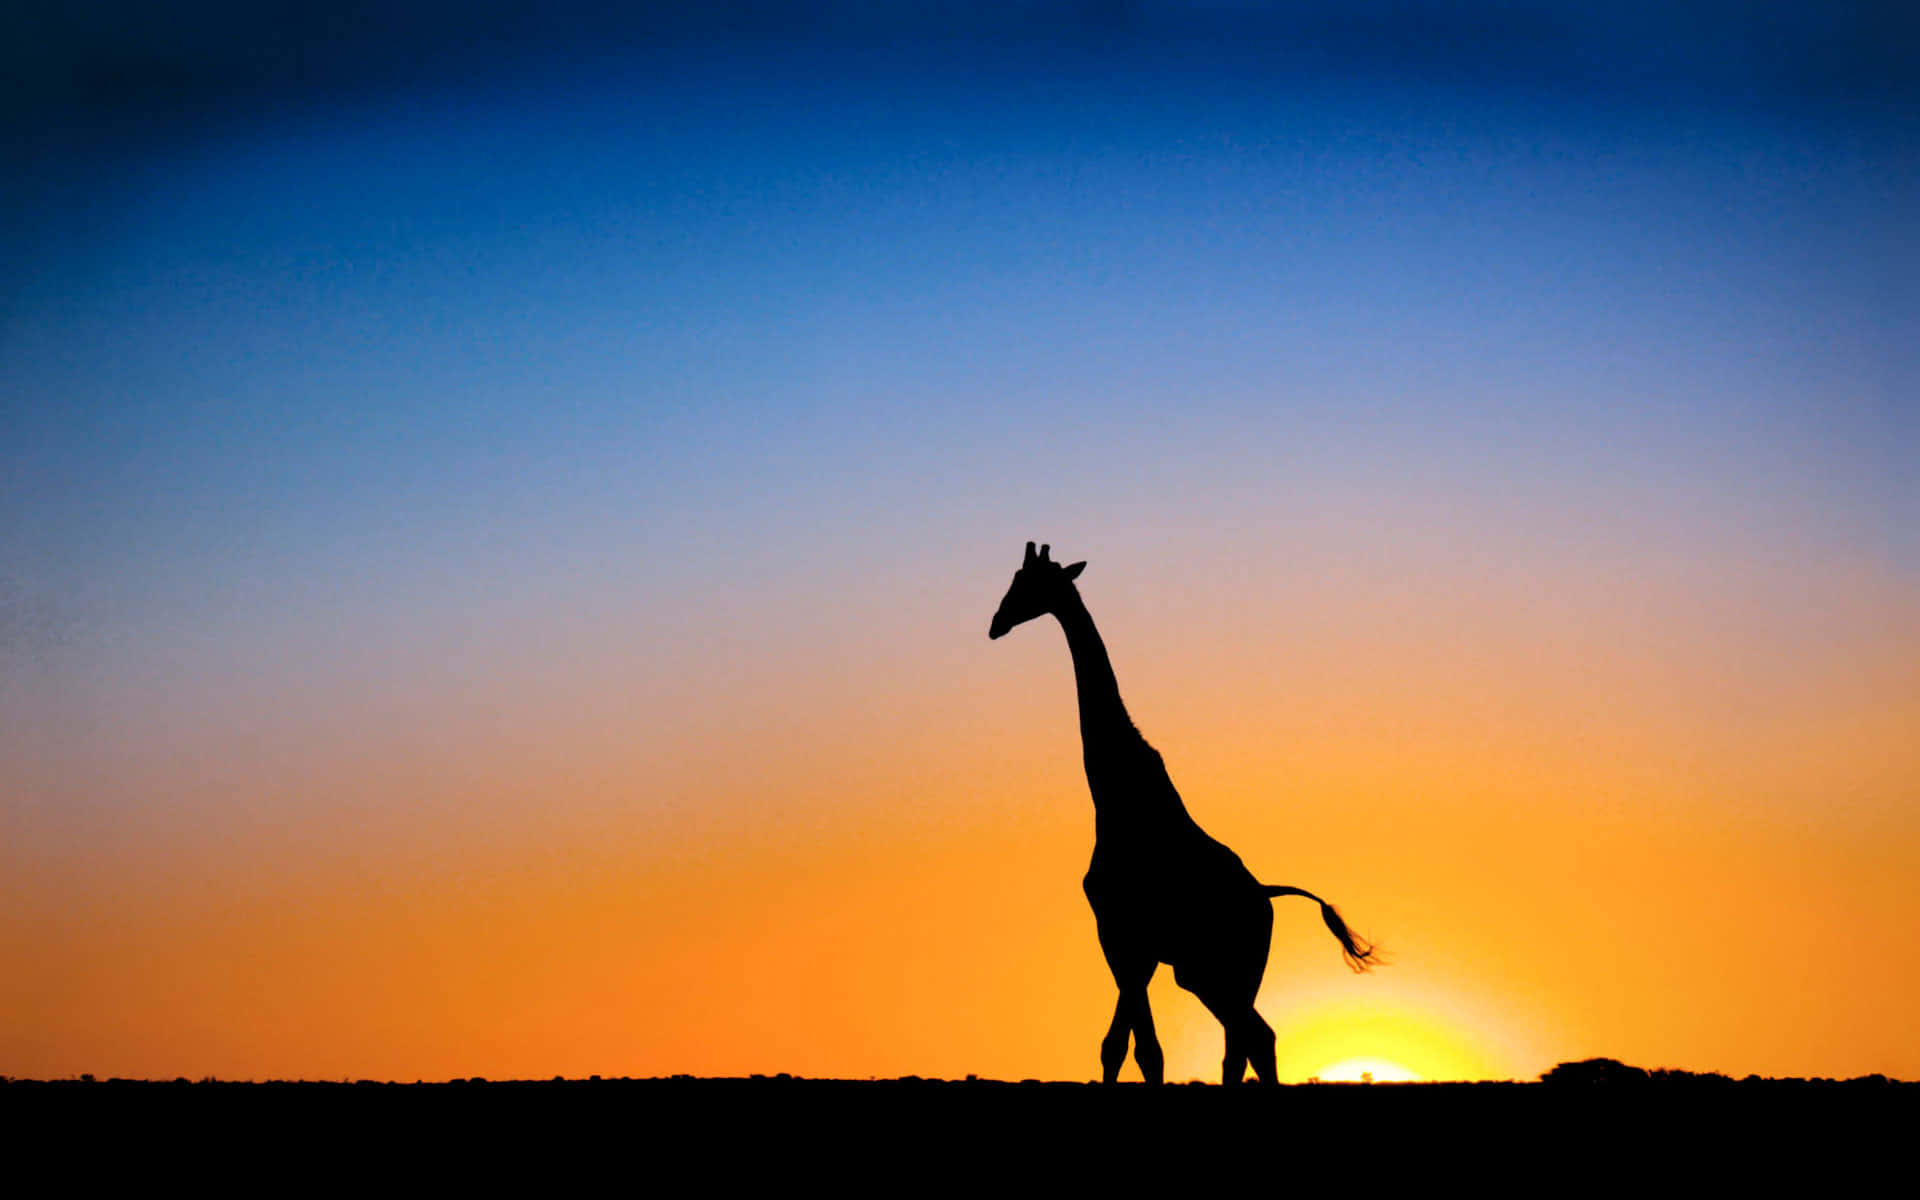 A giraffe stands tall in its grassy habitat